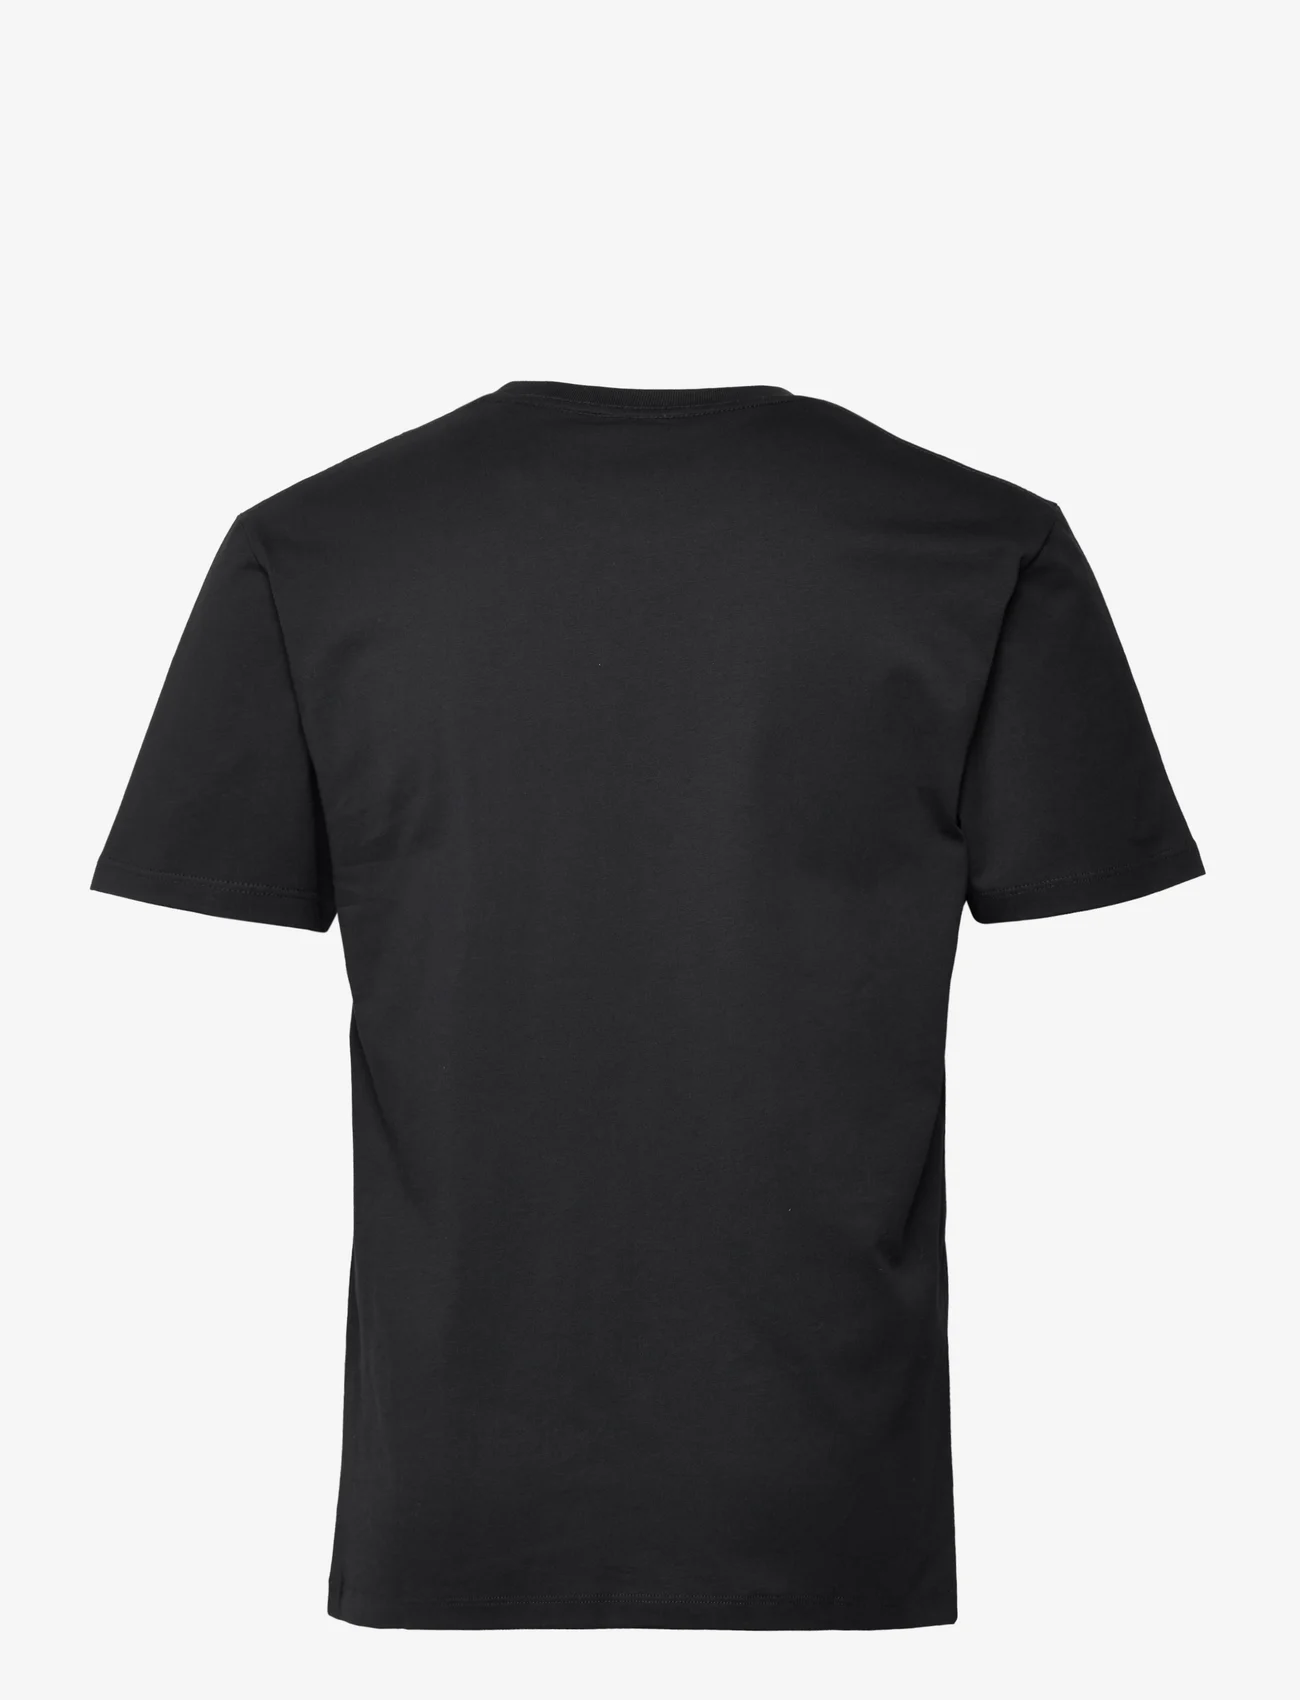 The Kooples - T-SHIRT MC - basic t-shirts - black - 1